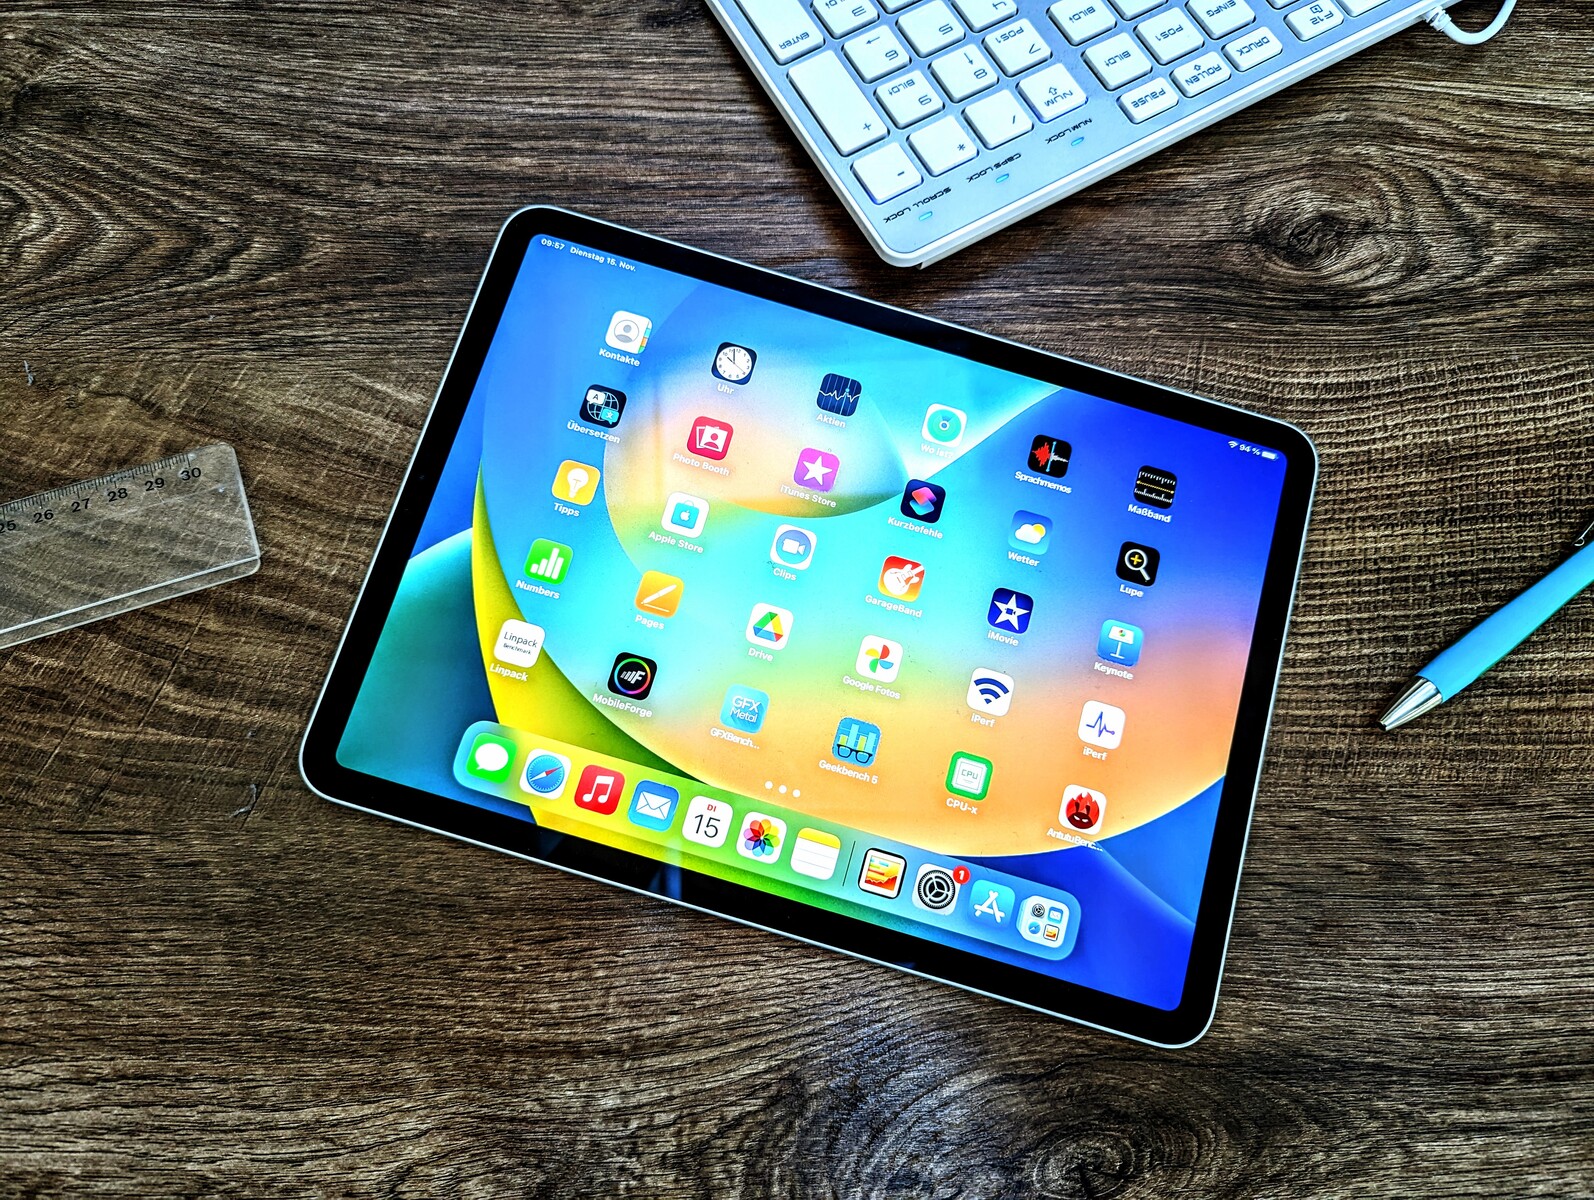 Apple iPad Pro 12.9-inch 6th Gen: Prices, Colors & Specs